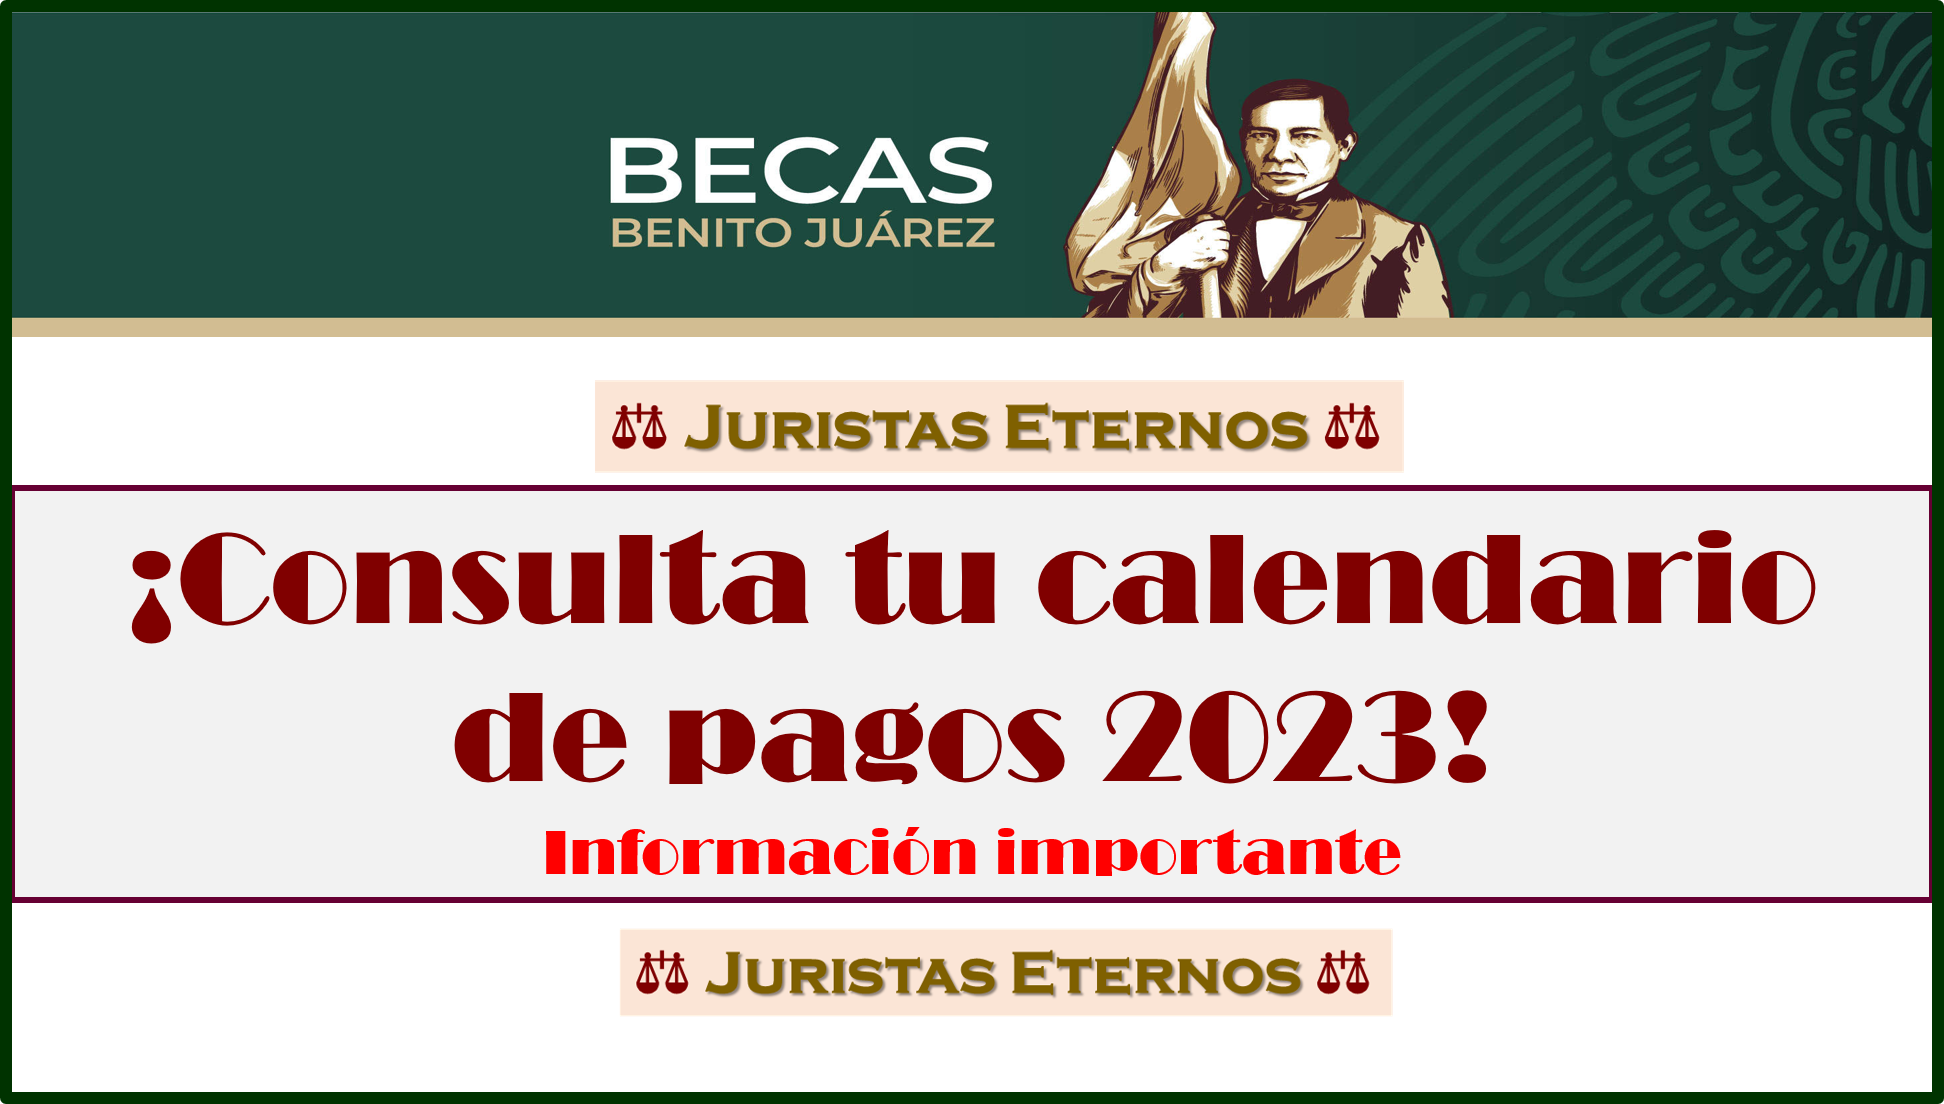 ¡ATENTOS! Calendario de pagos de Becas Benito Juárez 2023